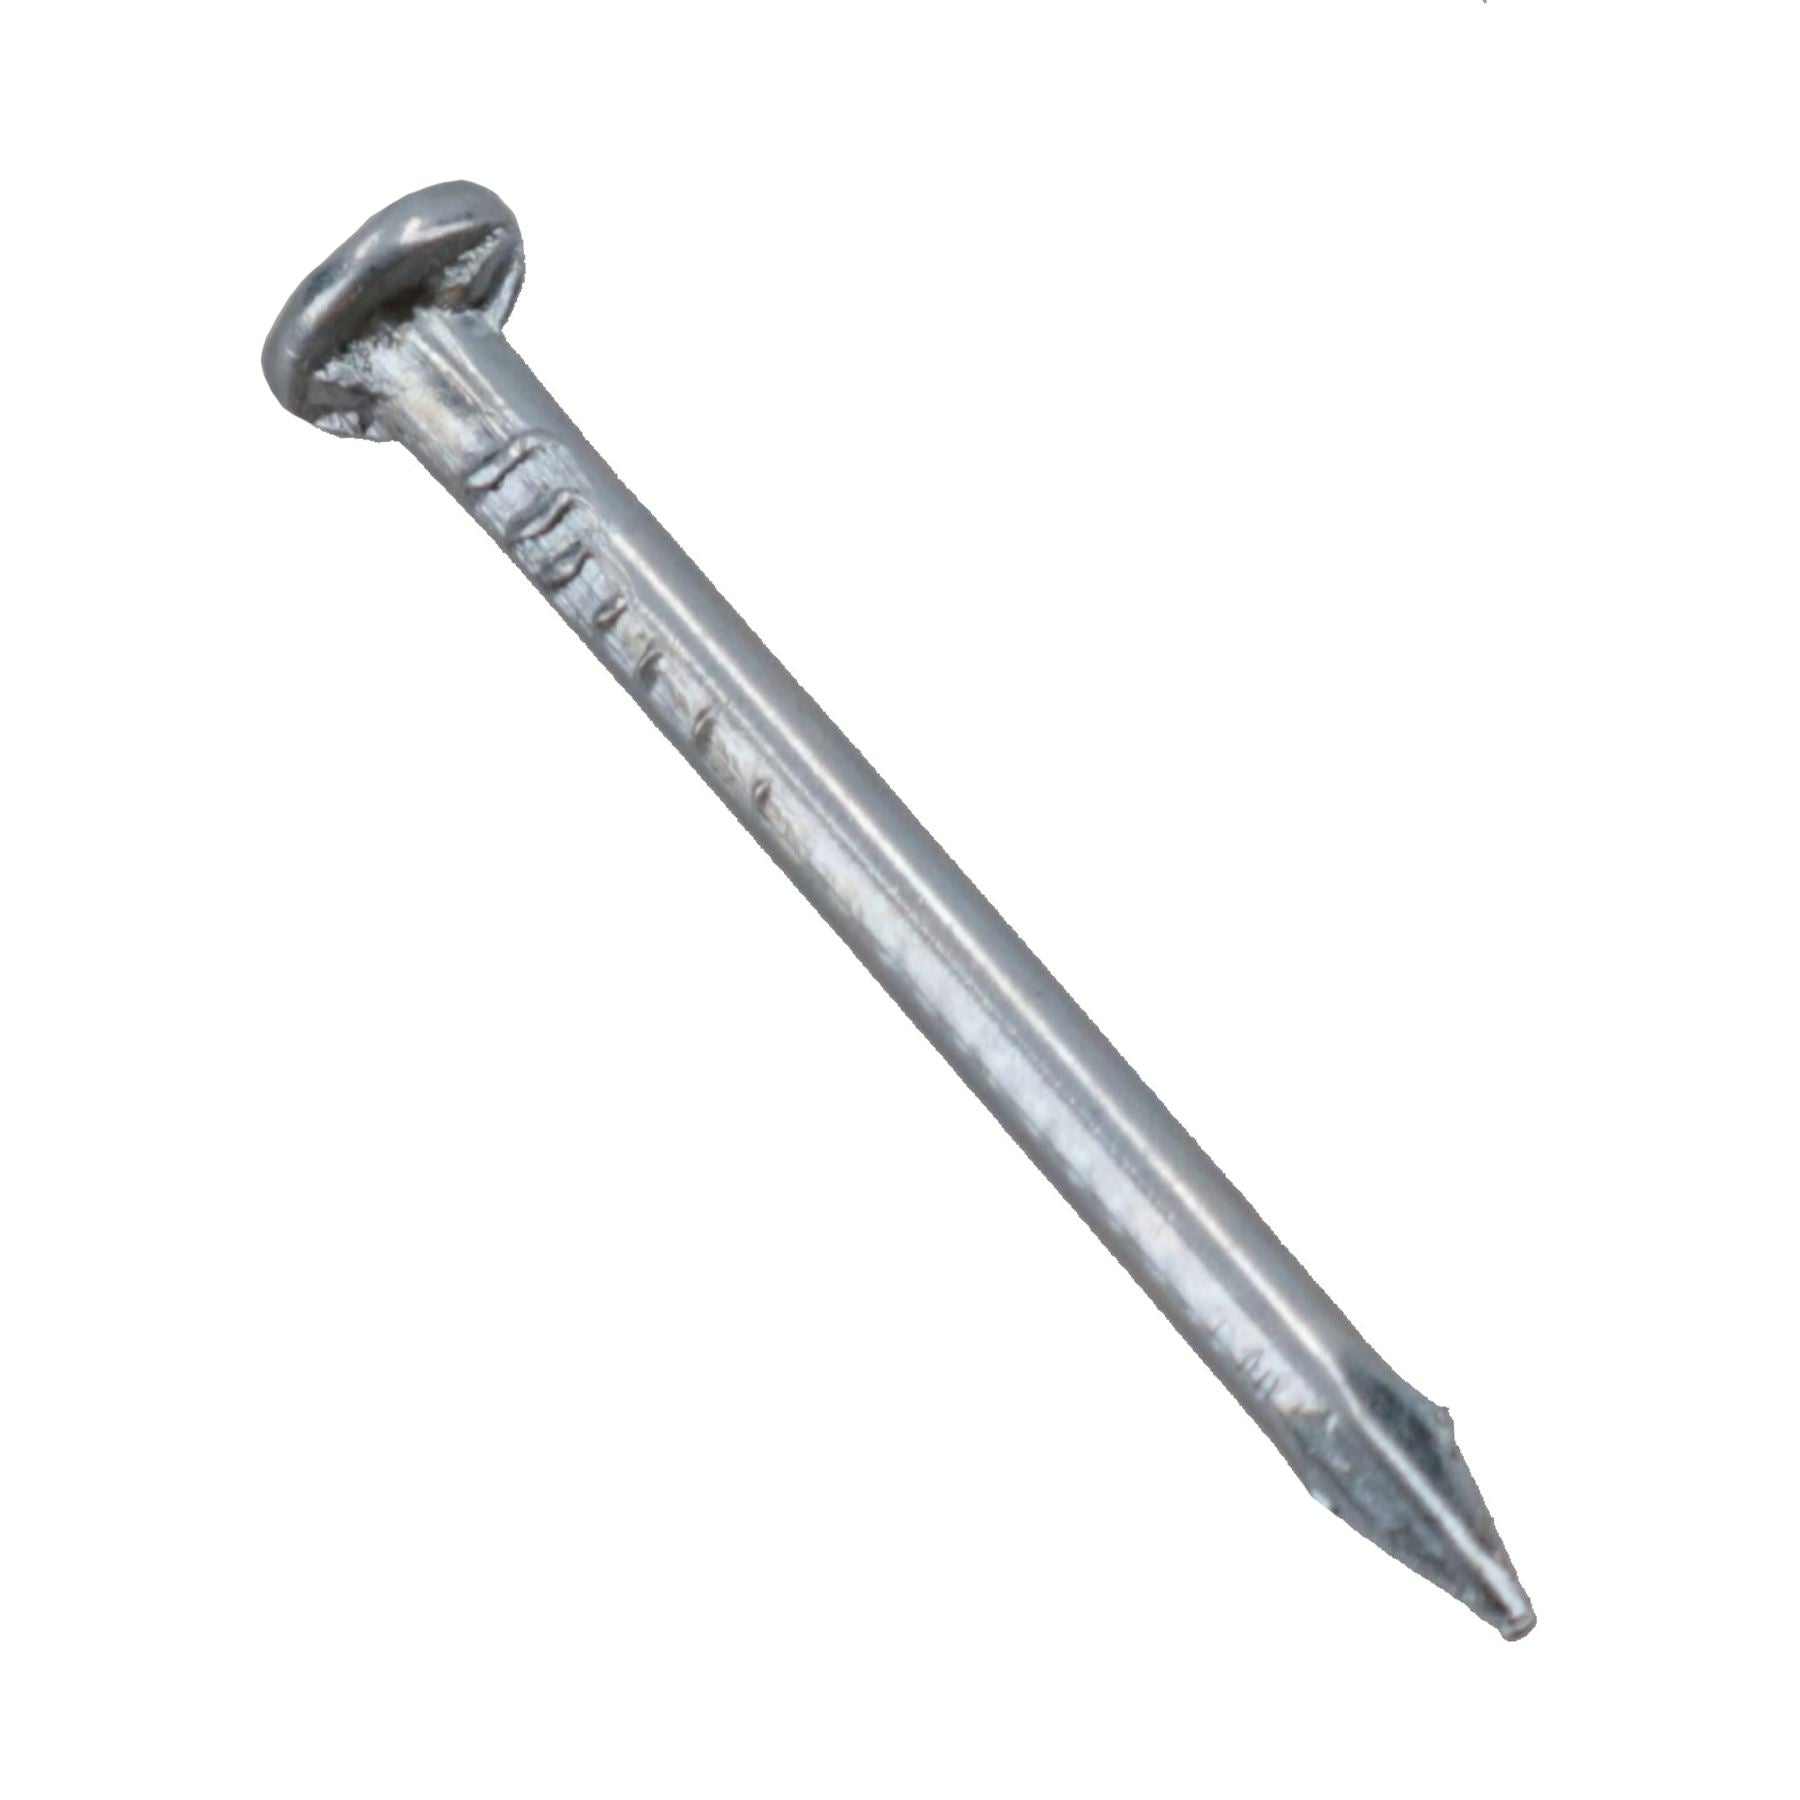 20mm / 0.75” Flat Headed Multi Purpose Nails Panel Pins Tacks Carpentry Fasteners